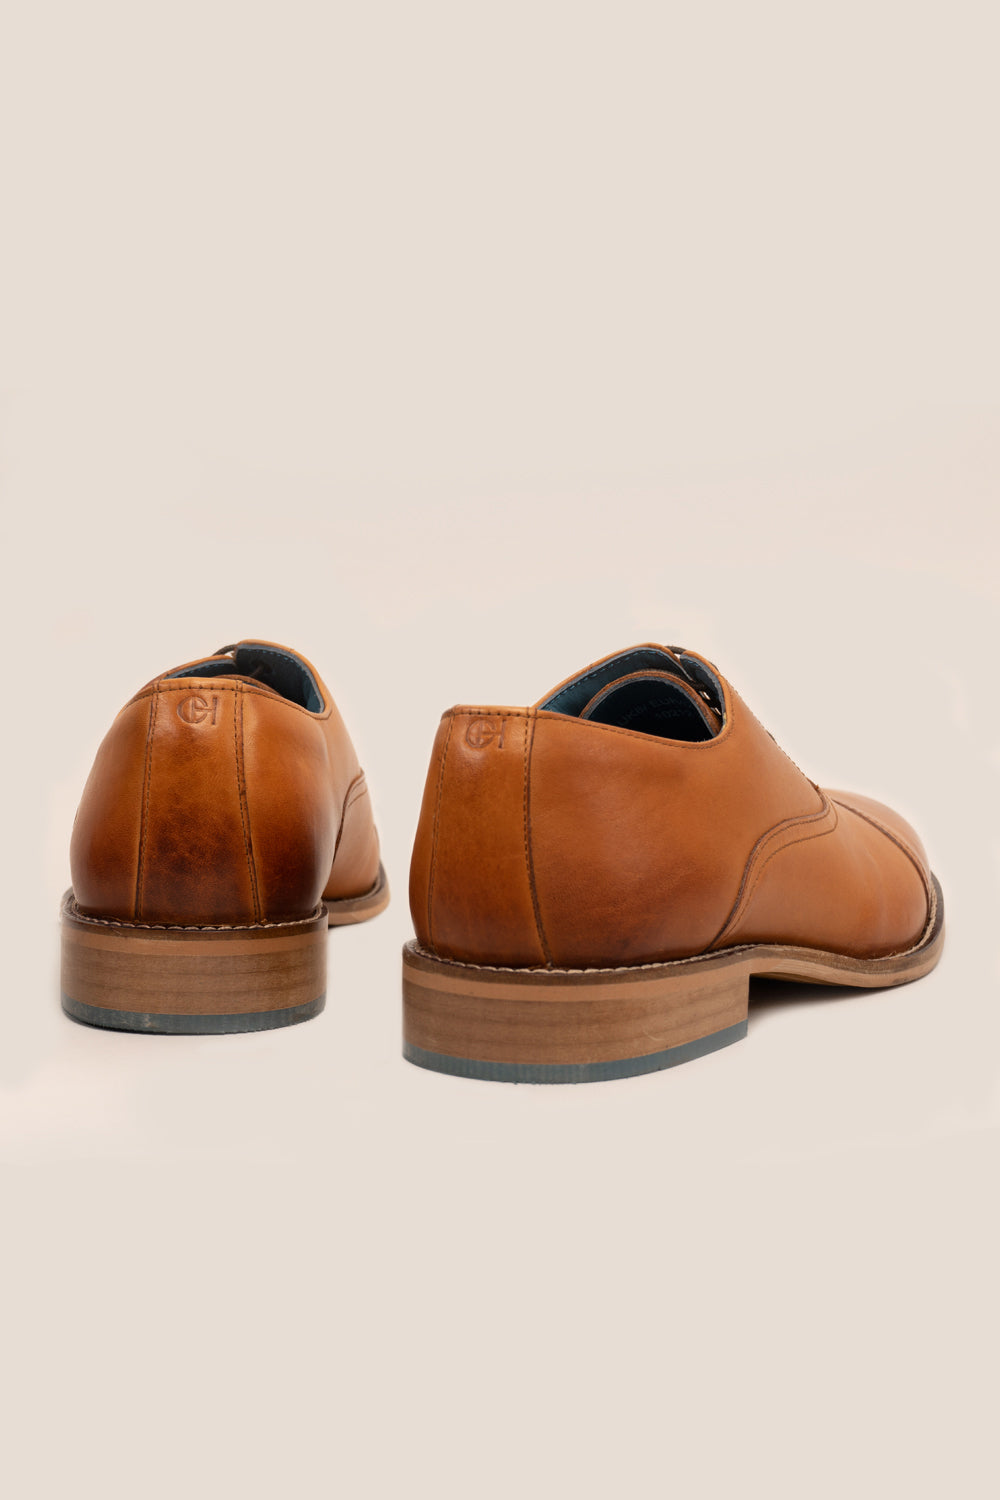 Oswin Hyde Tan Leather Toecap Oxford shoe